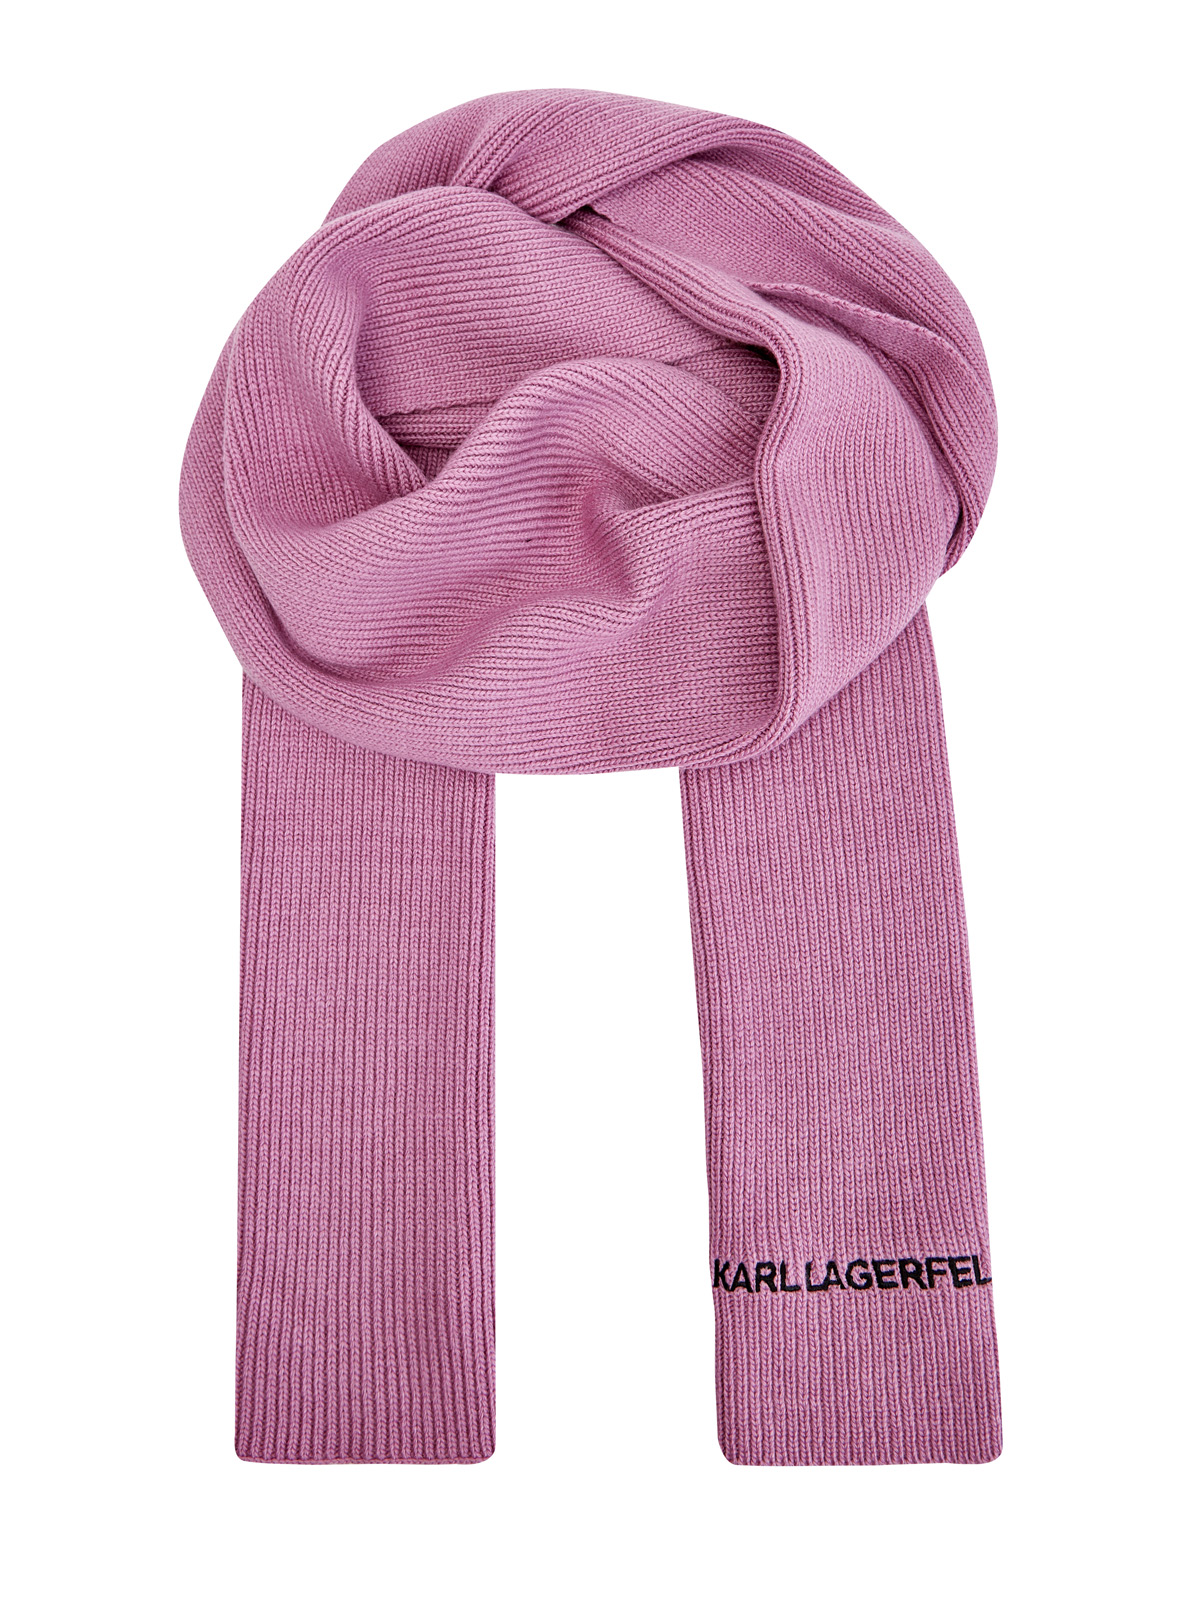 Шарф эластичной вязки из коллекции K/Essential с вышивкой KARL LAGERFELD розового цвета